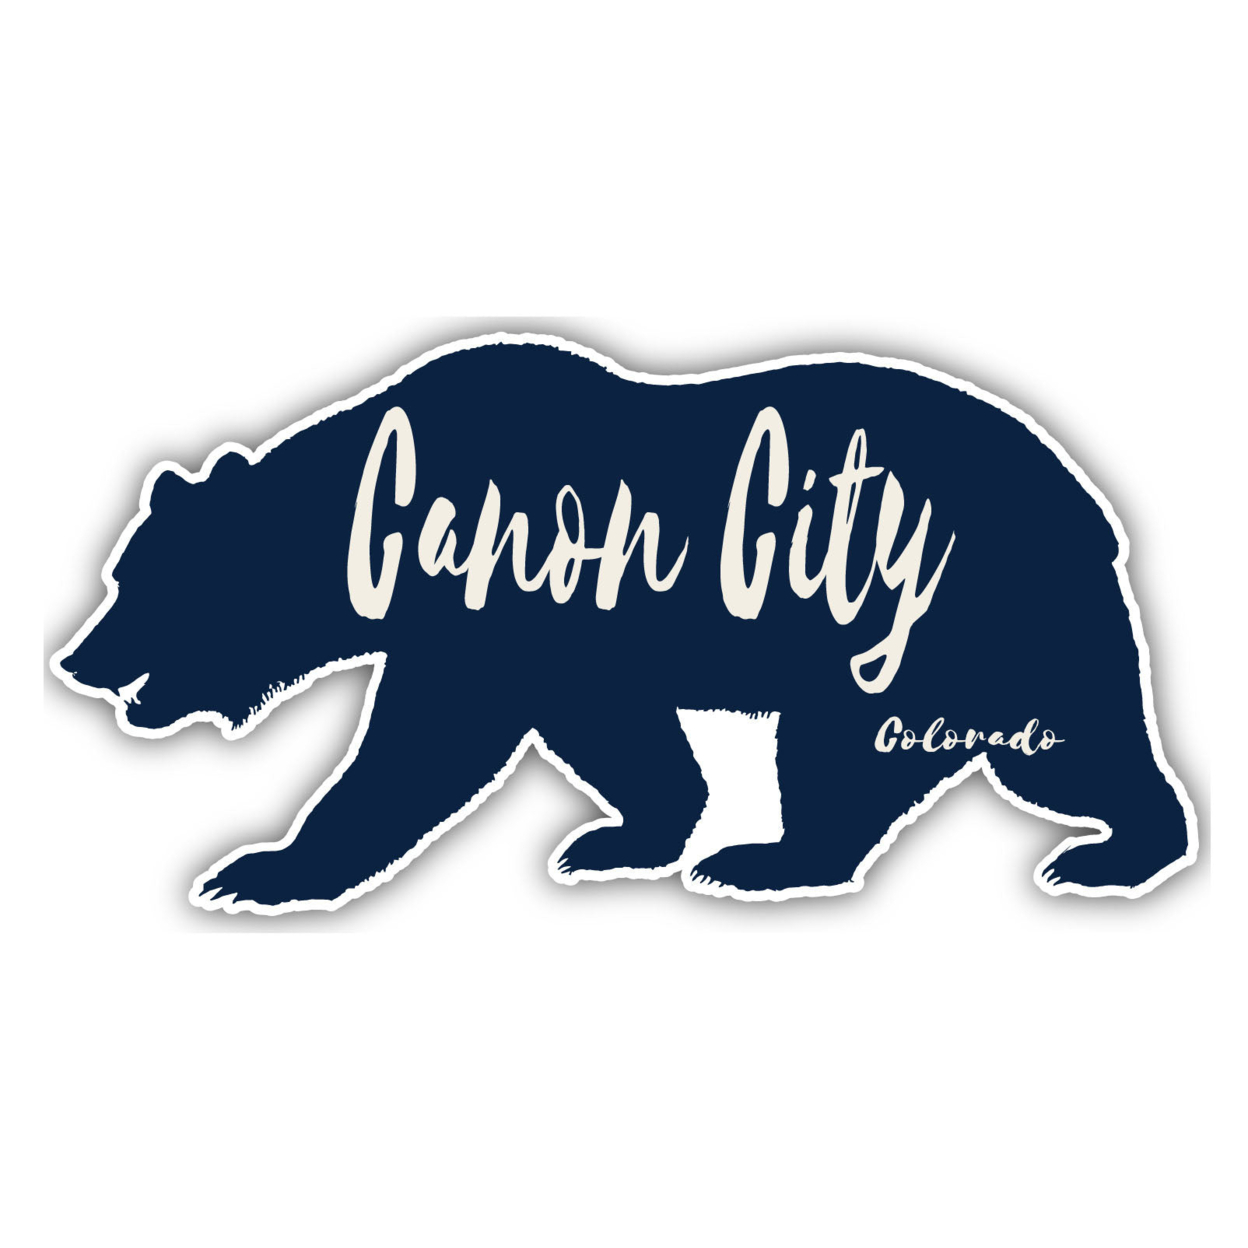 Canon City Colorado Souvenir Decorative Stickers (Choose Theme And Size) - 4-Pack, 8-Inch, Tent